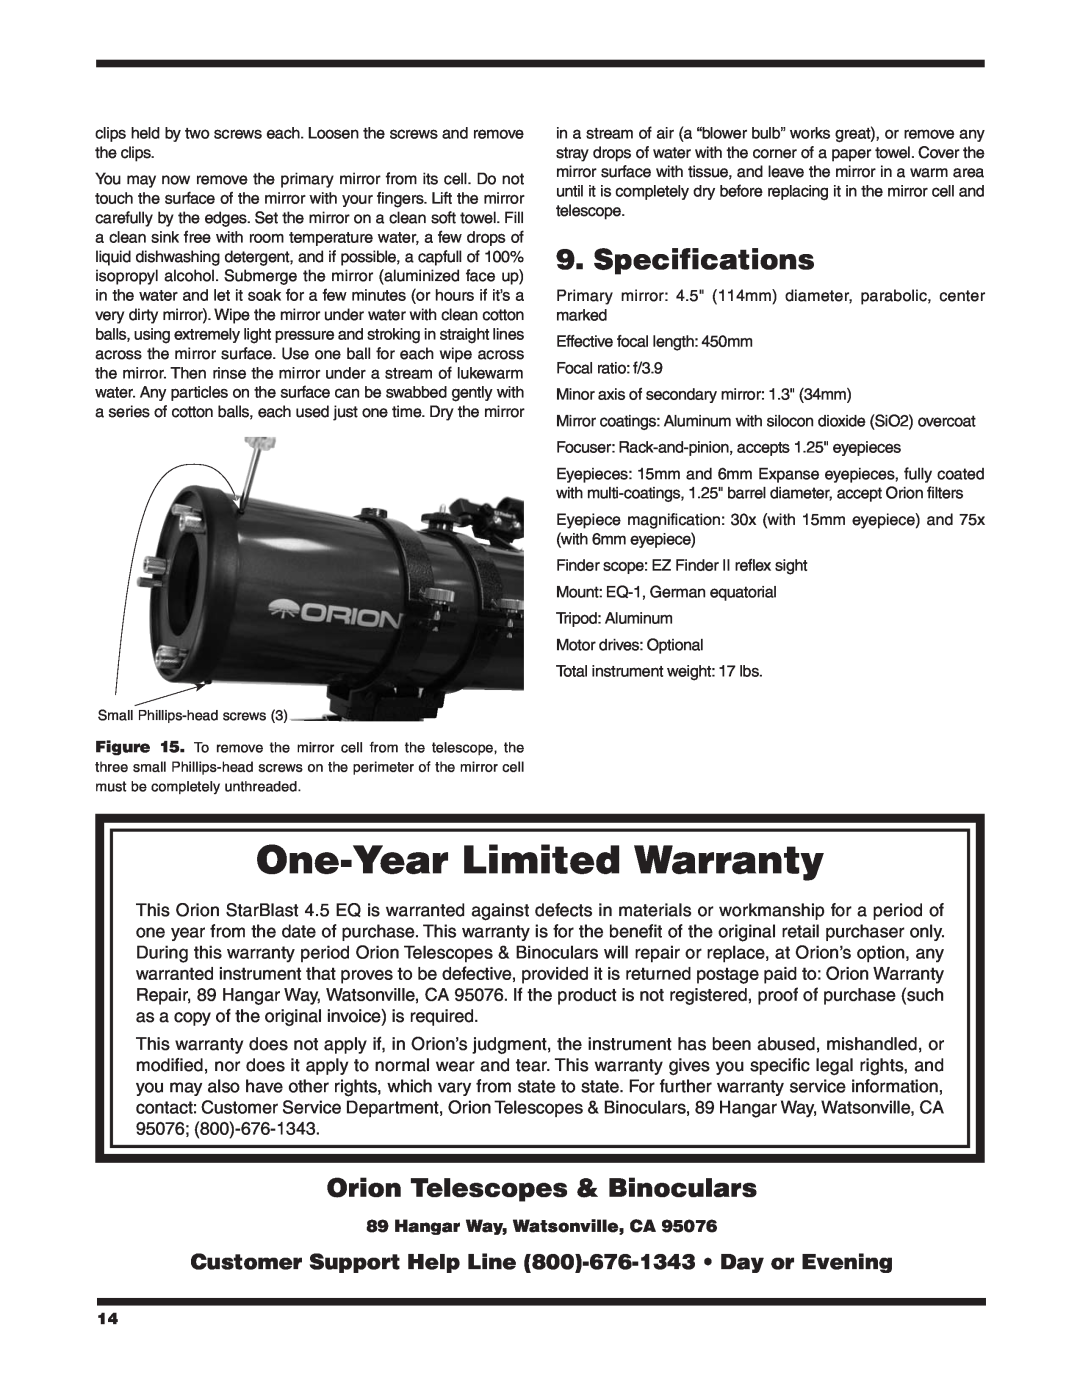 Orion 4.5 EQ Specifications, One-YearLimited Warranty, Orion Telescopes & Binoculars, Hangar Way, Watsonville, CA 